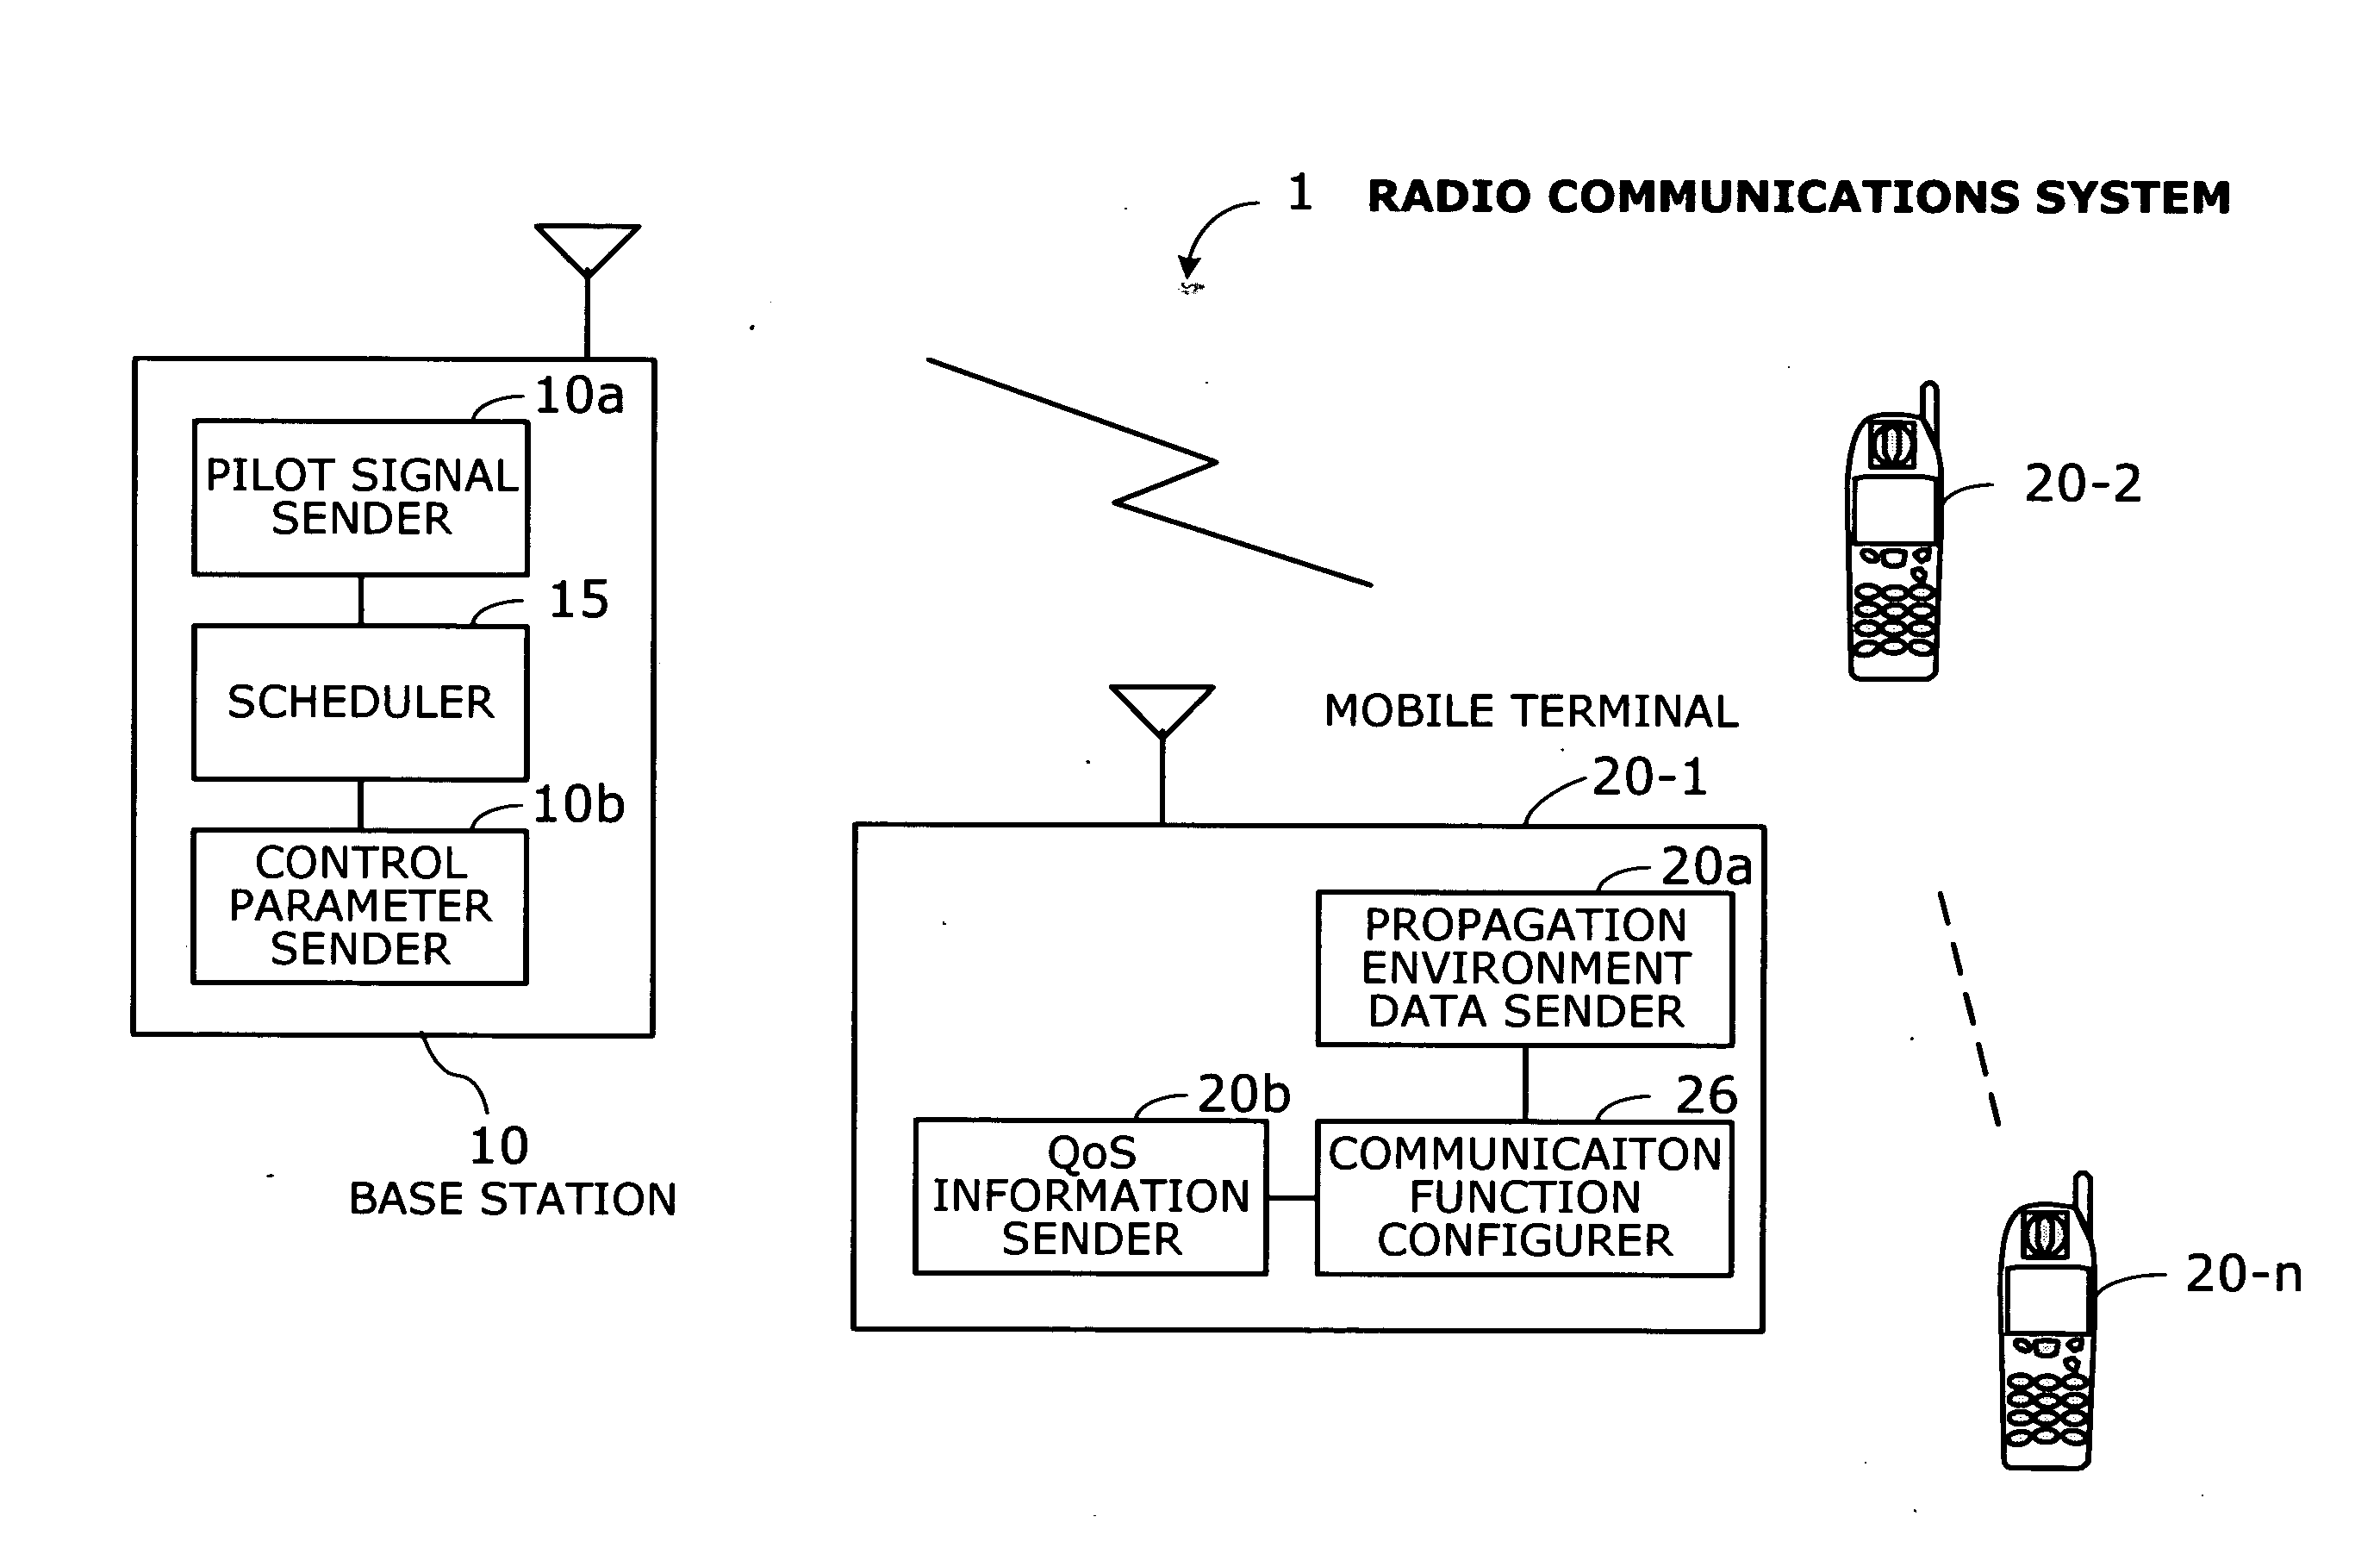 Radio communications system